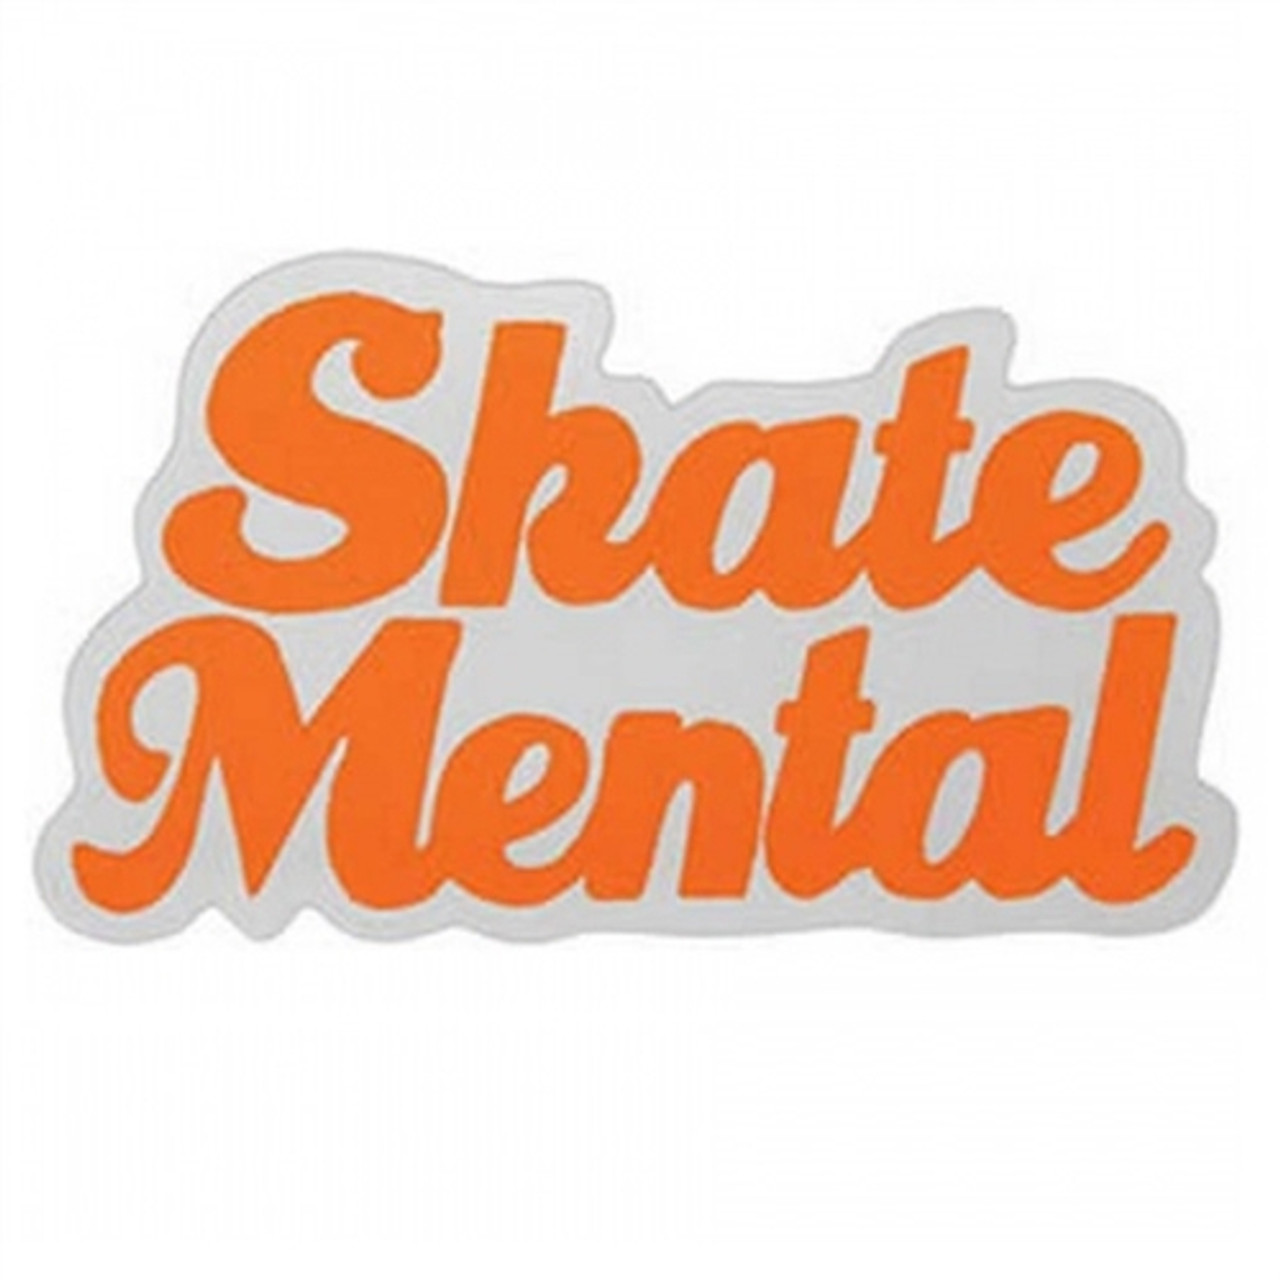 Skate Mental Script Sticker Orange 7inch